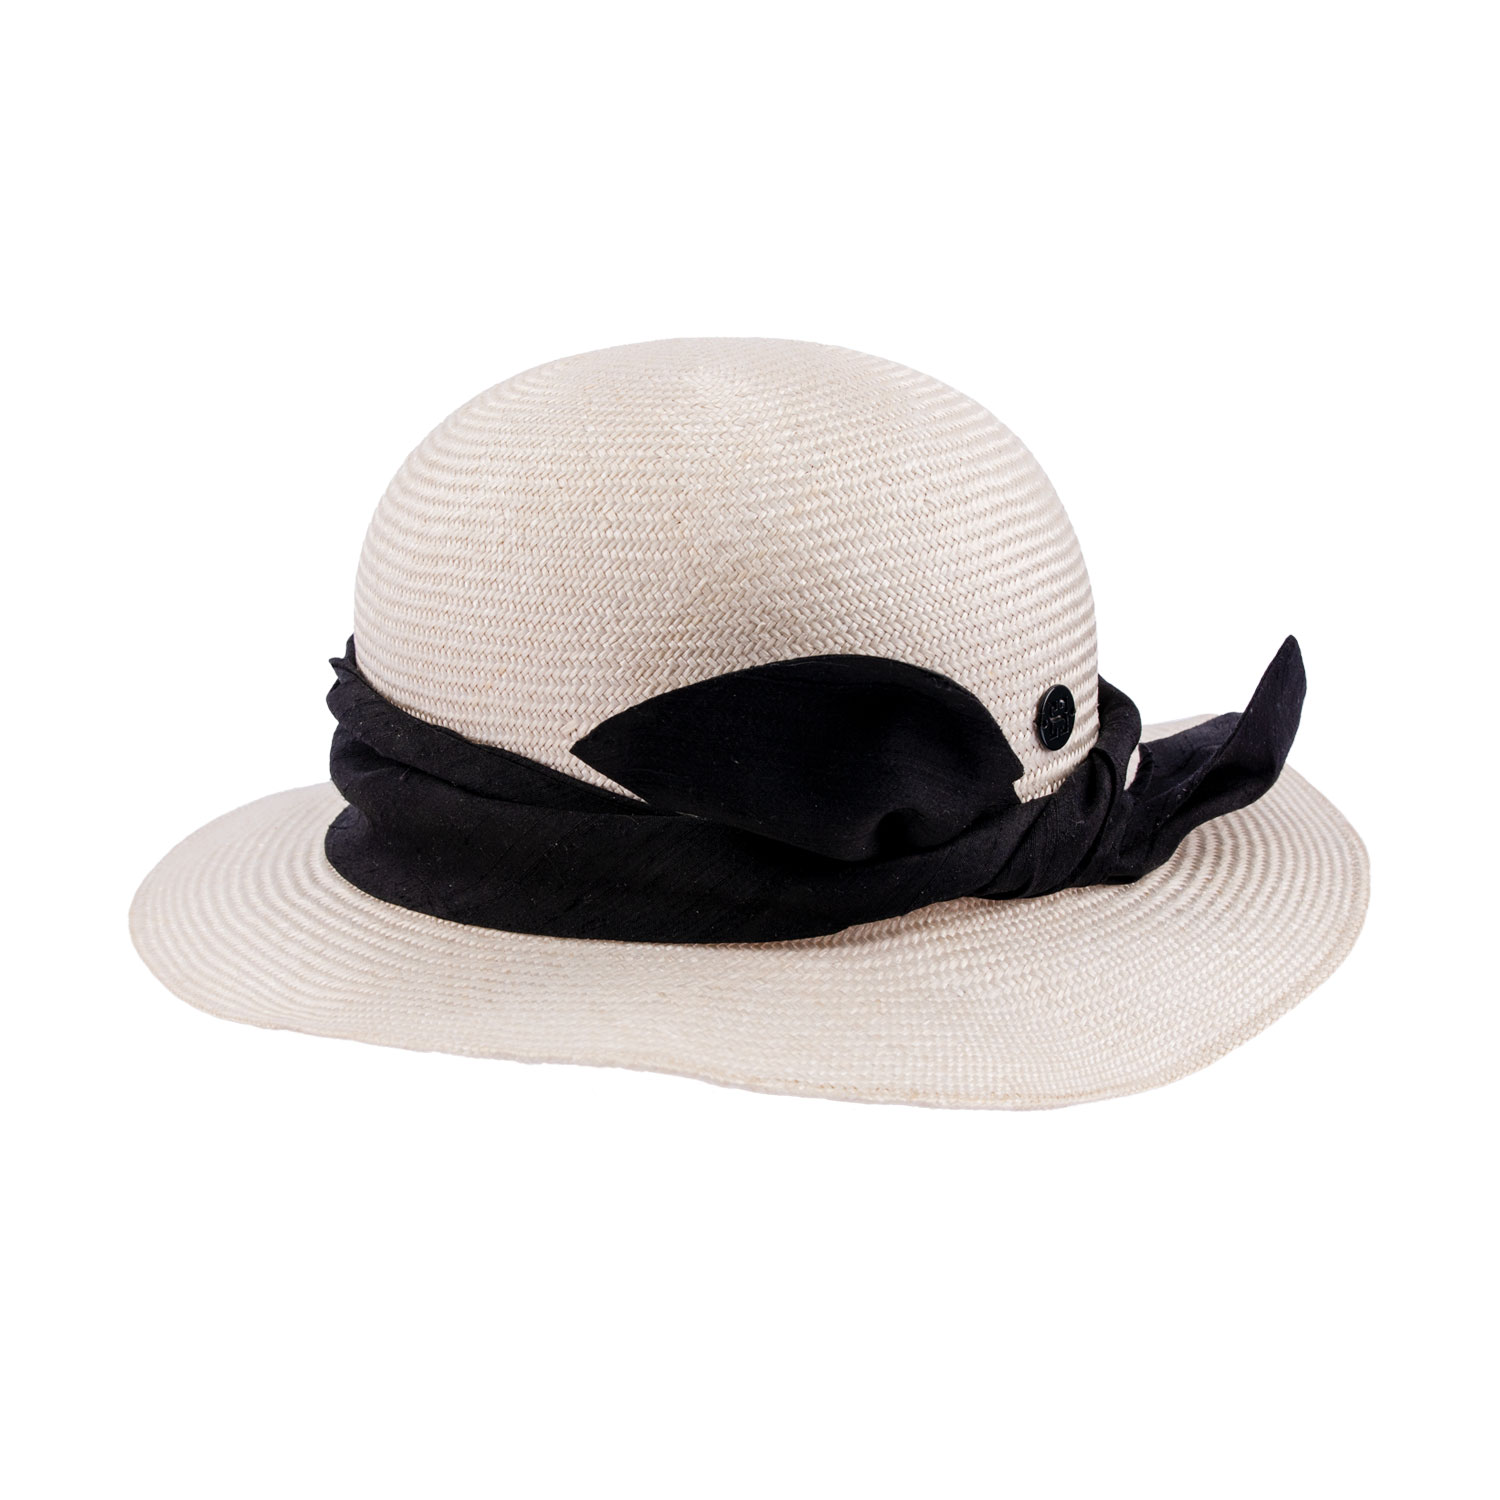 Sibi Hats Women's Bianca - White Visca Straw Hat